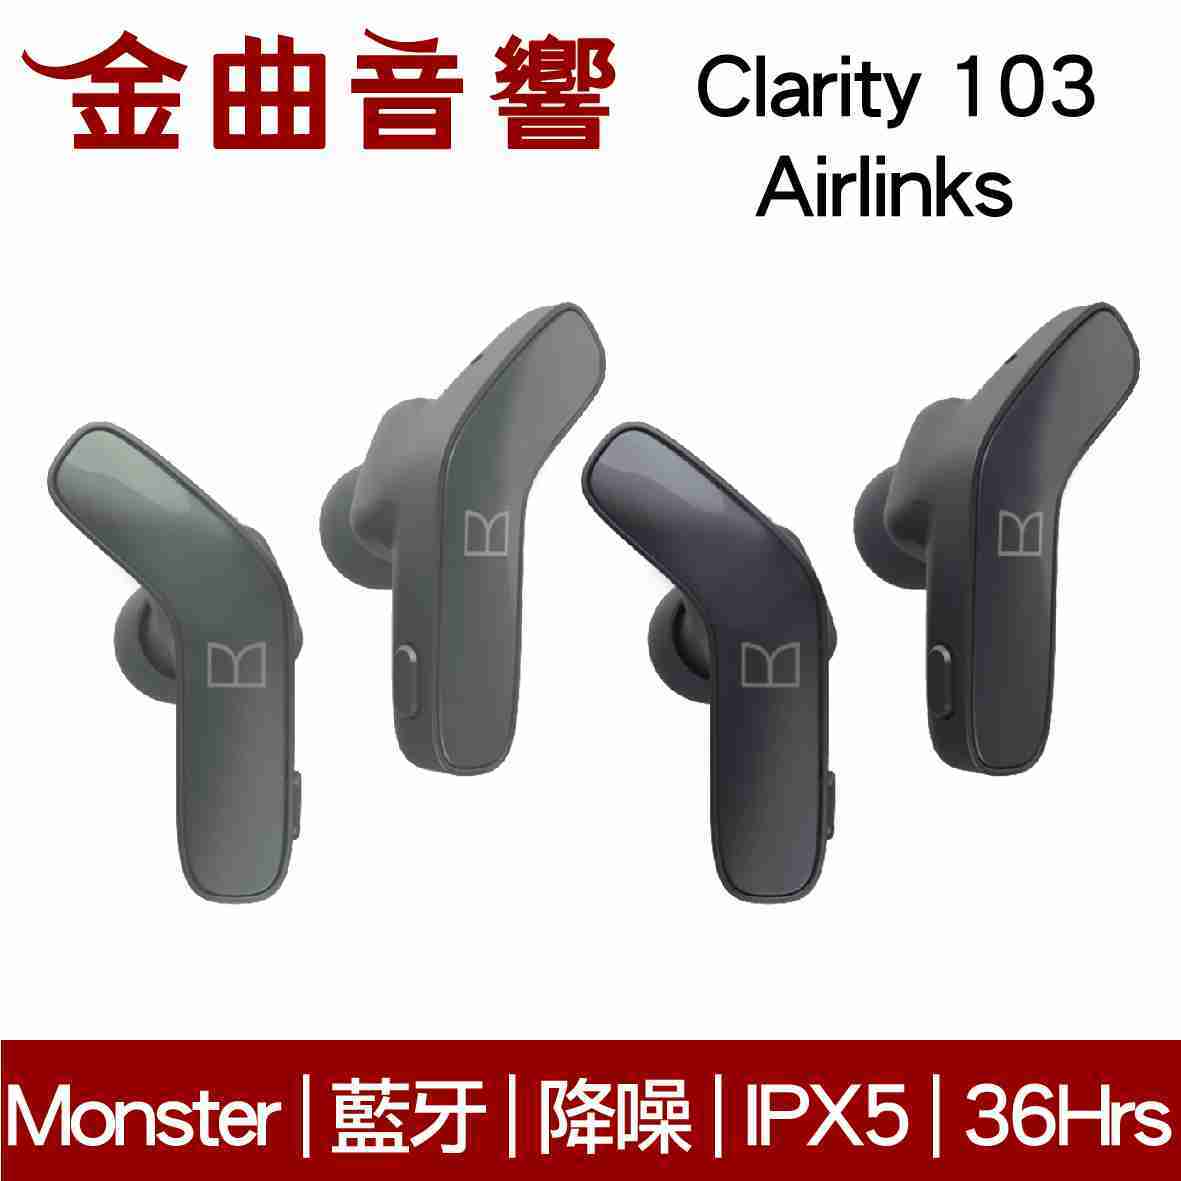 Monster Clarity 103 Airlinks 暮光綠 真無線 藍芽耳機 | 金曲音響